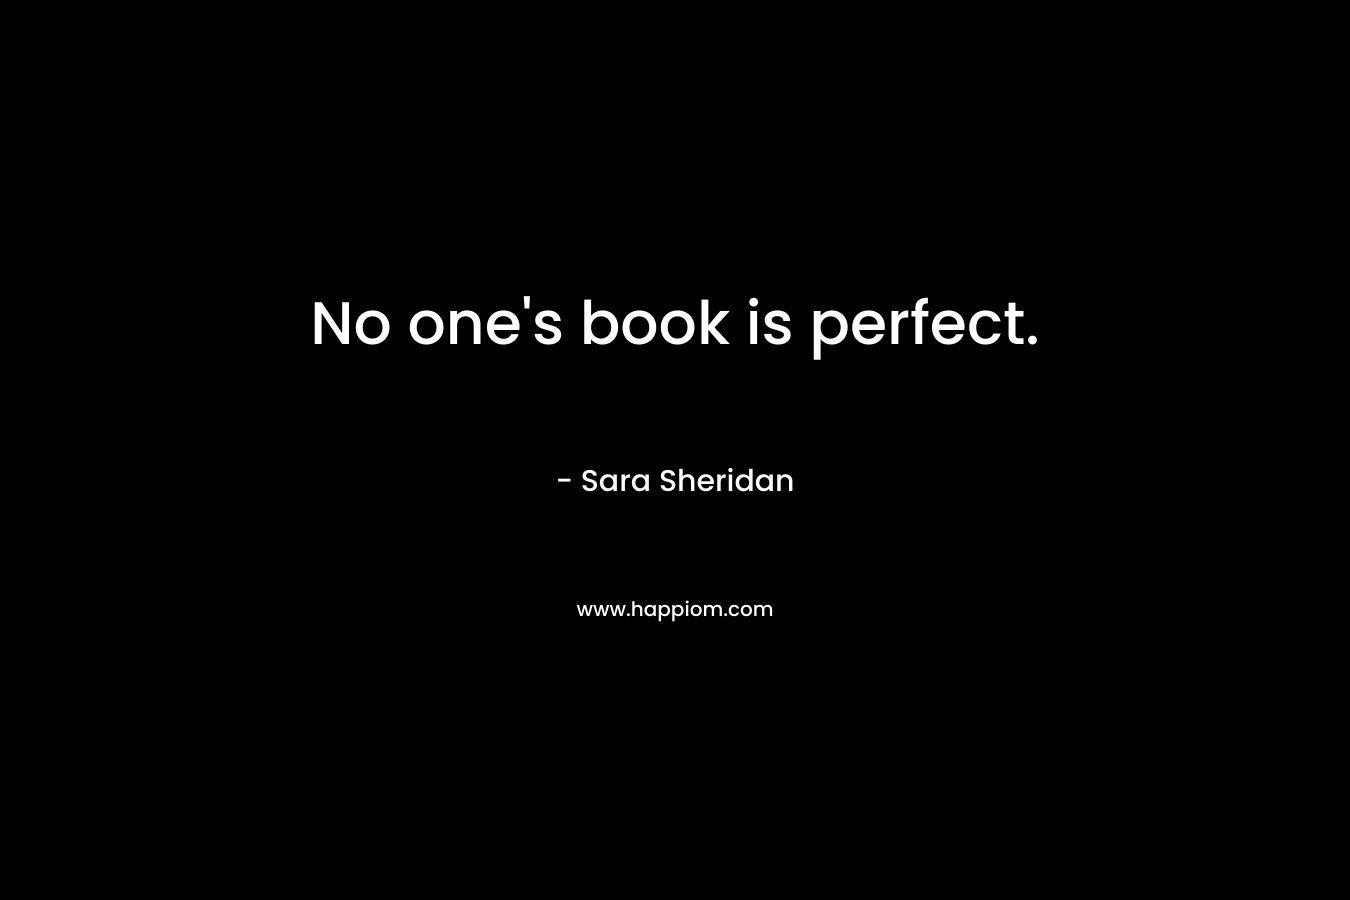 No one’s book is perfect. – Sara Sheridan